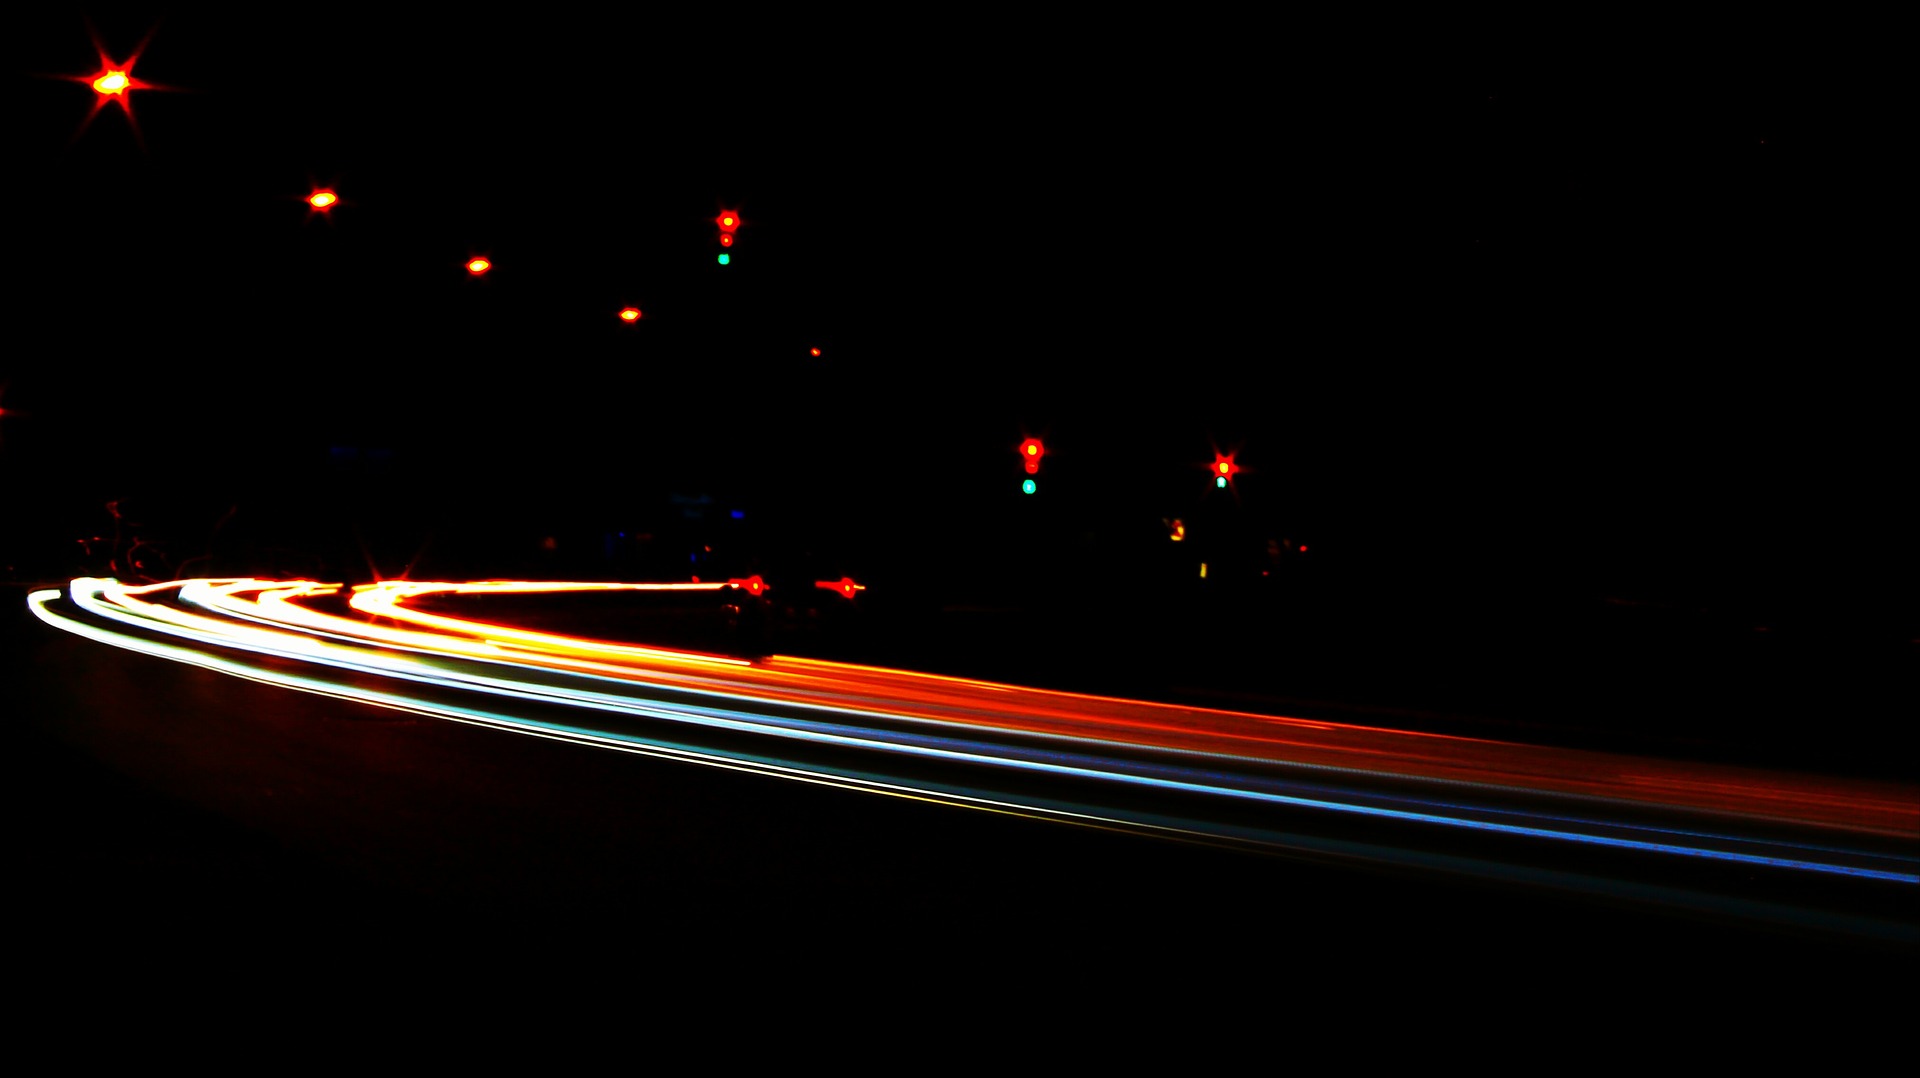 Wallpaper Road in night, lights trail